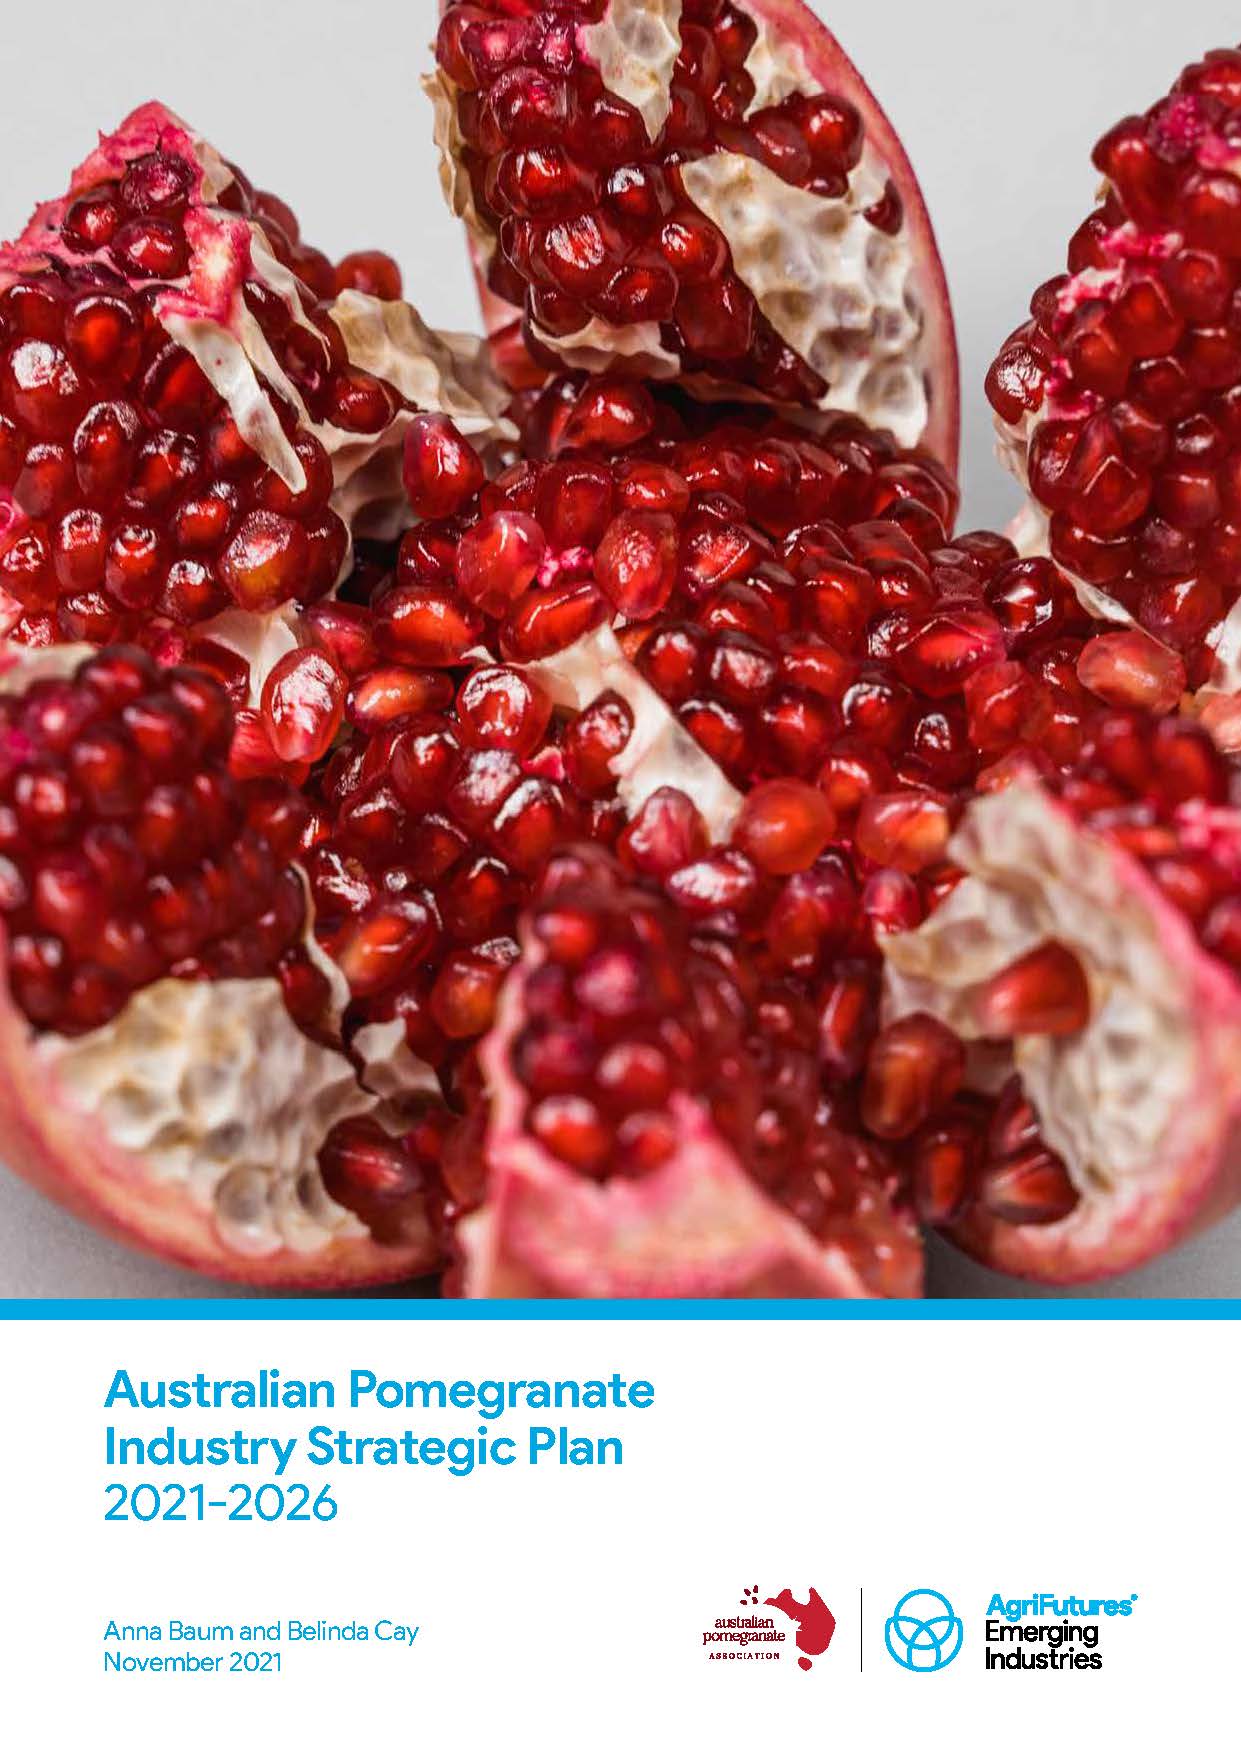 Australian Pomegranate Industry Strategic Plan 2021-2026 - image